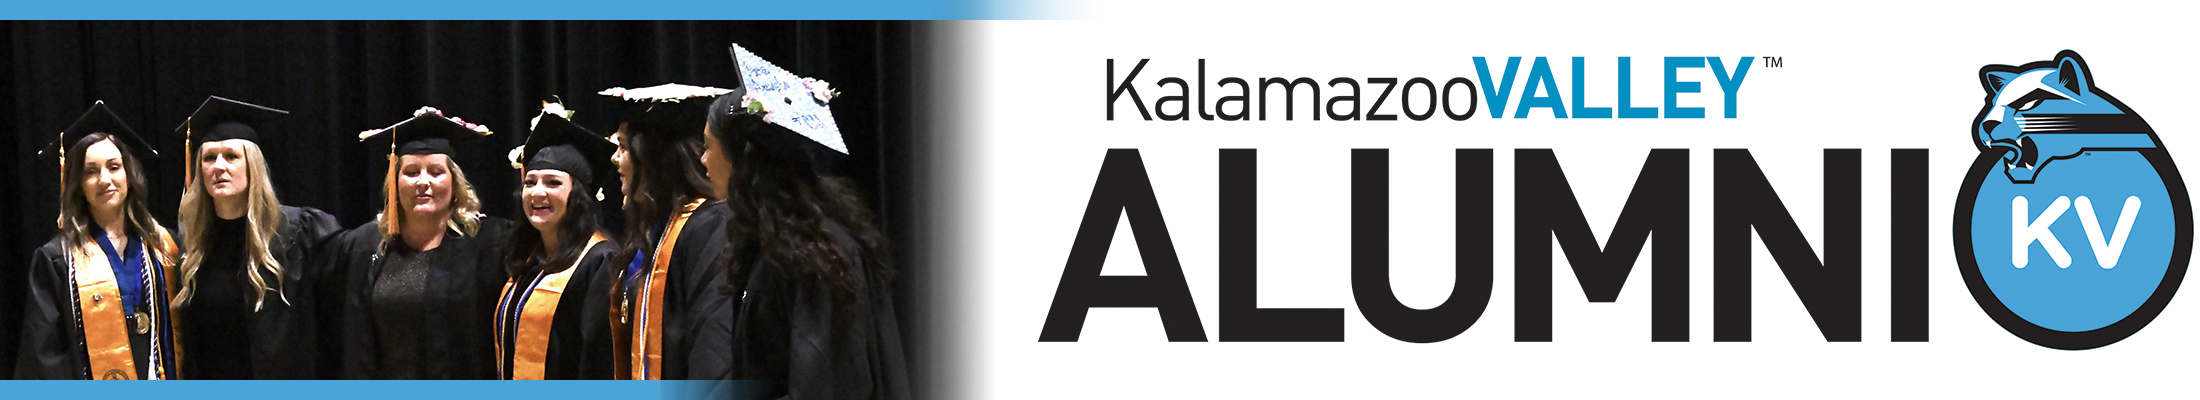 Kalamazoo Valley Alumni